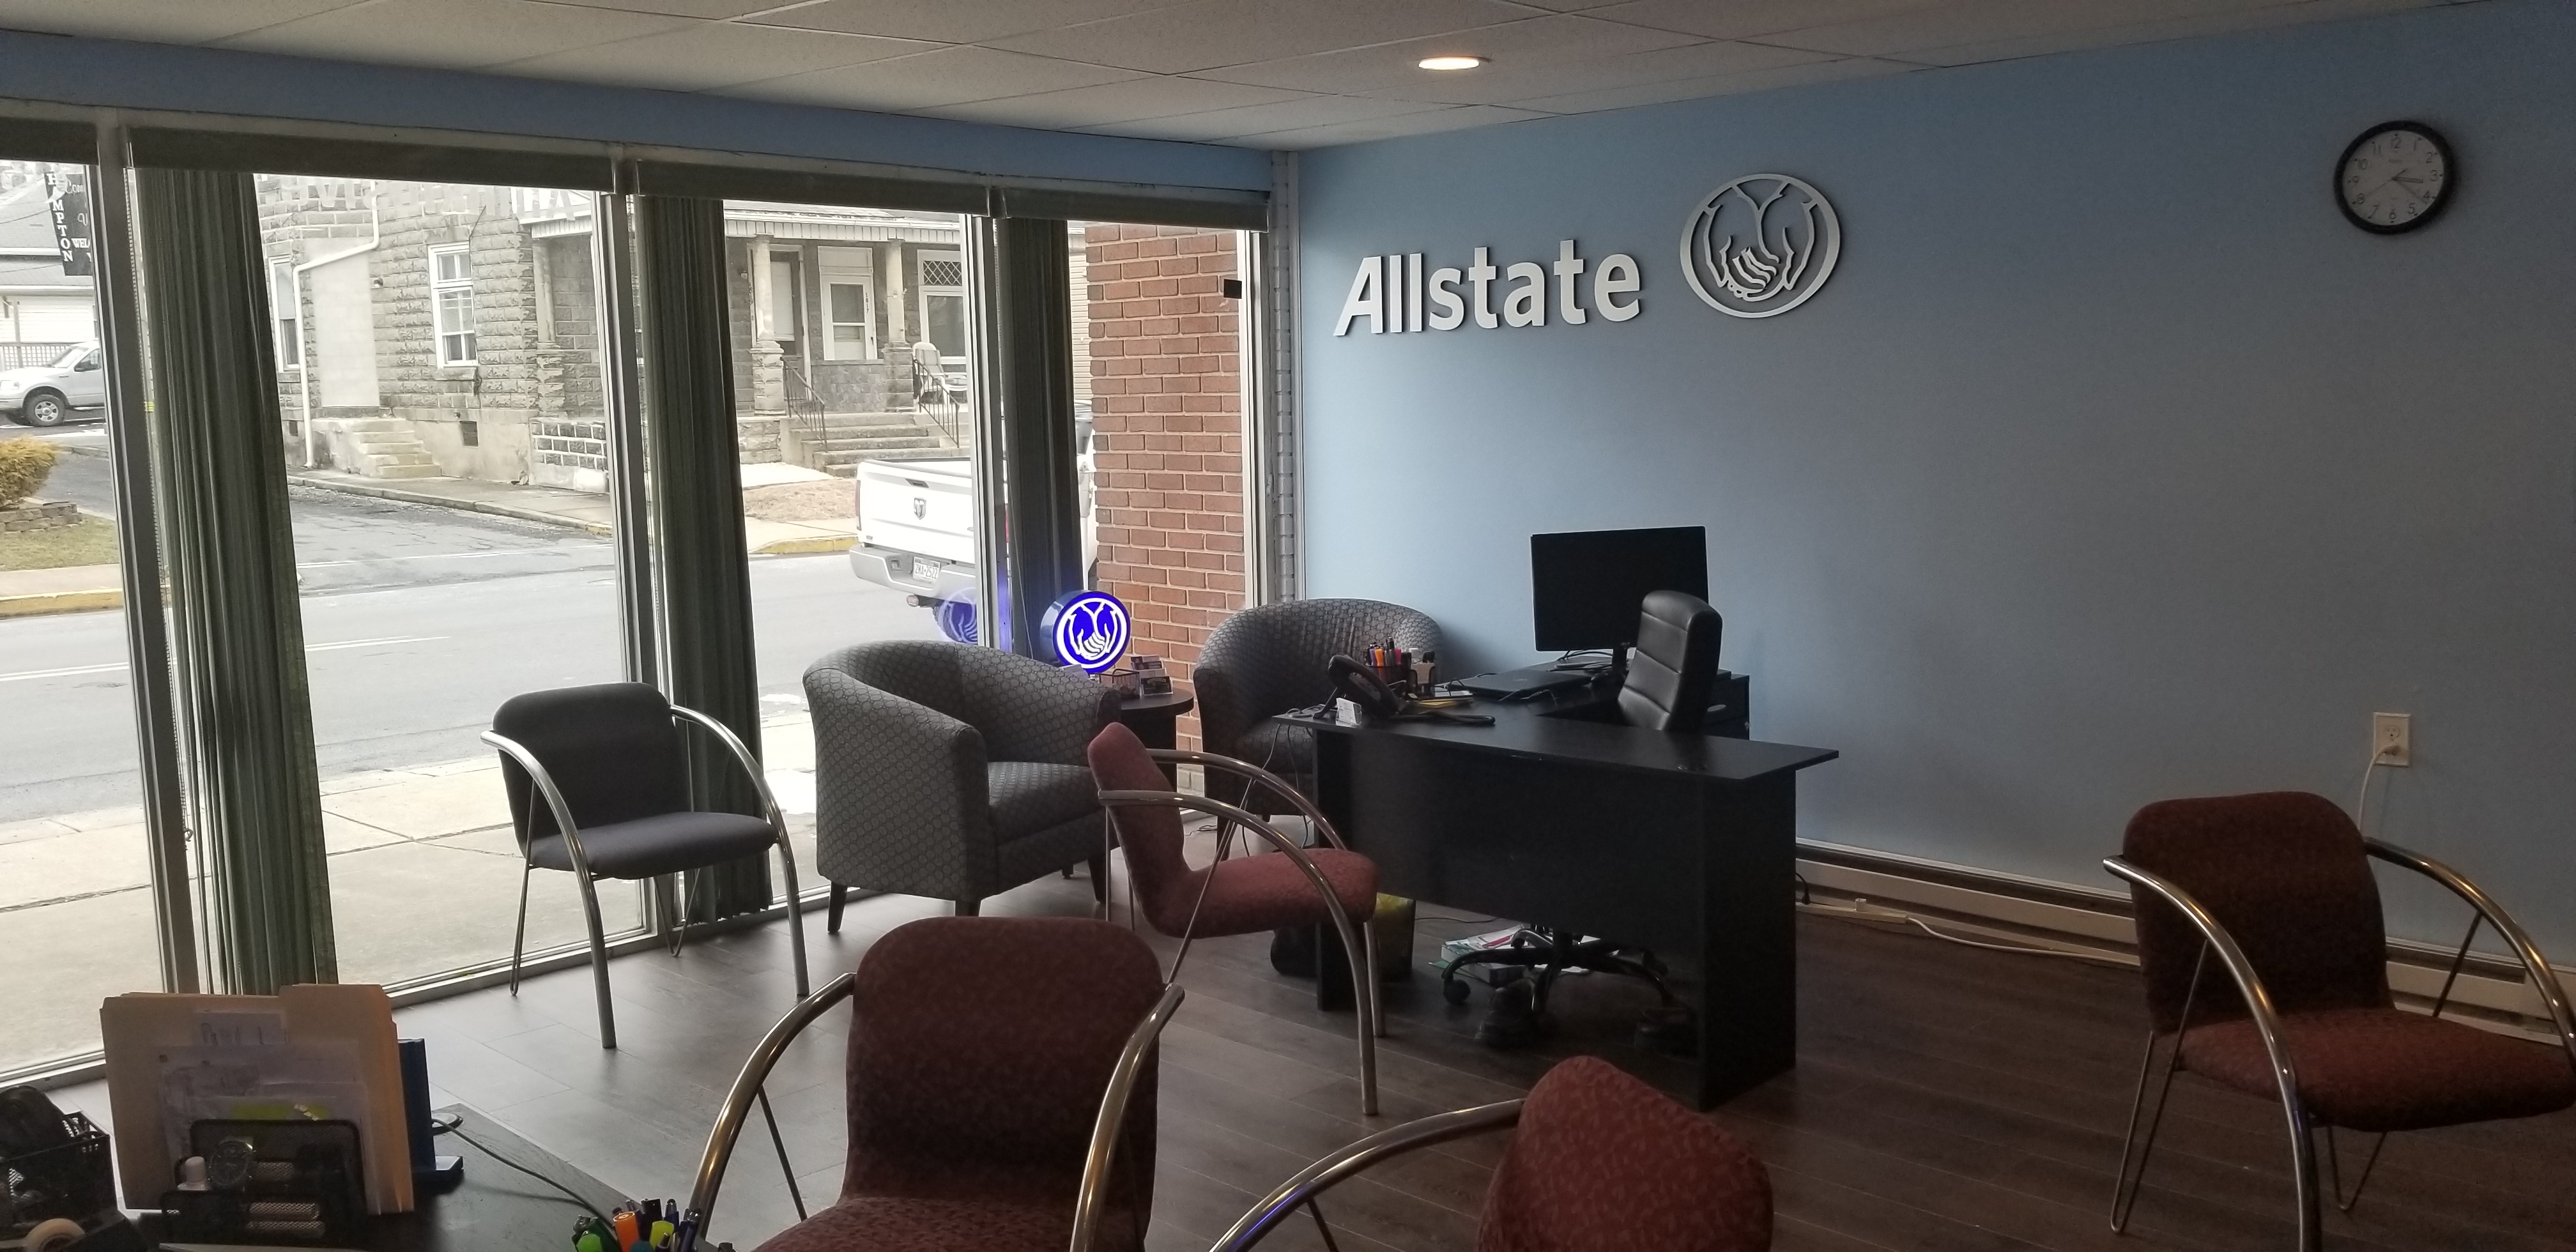 Gregory Swatt: Allstate Insurance Photo